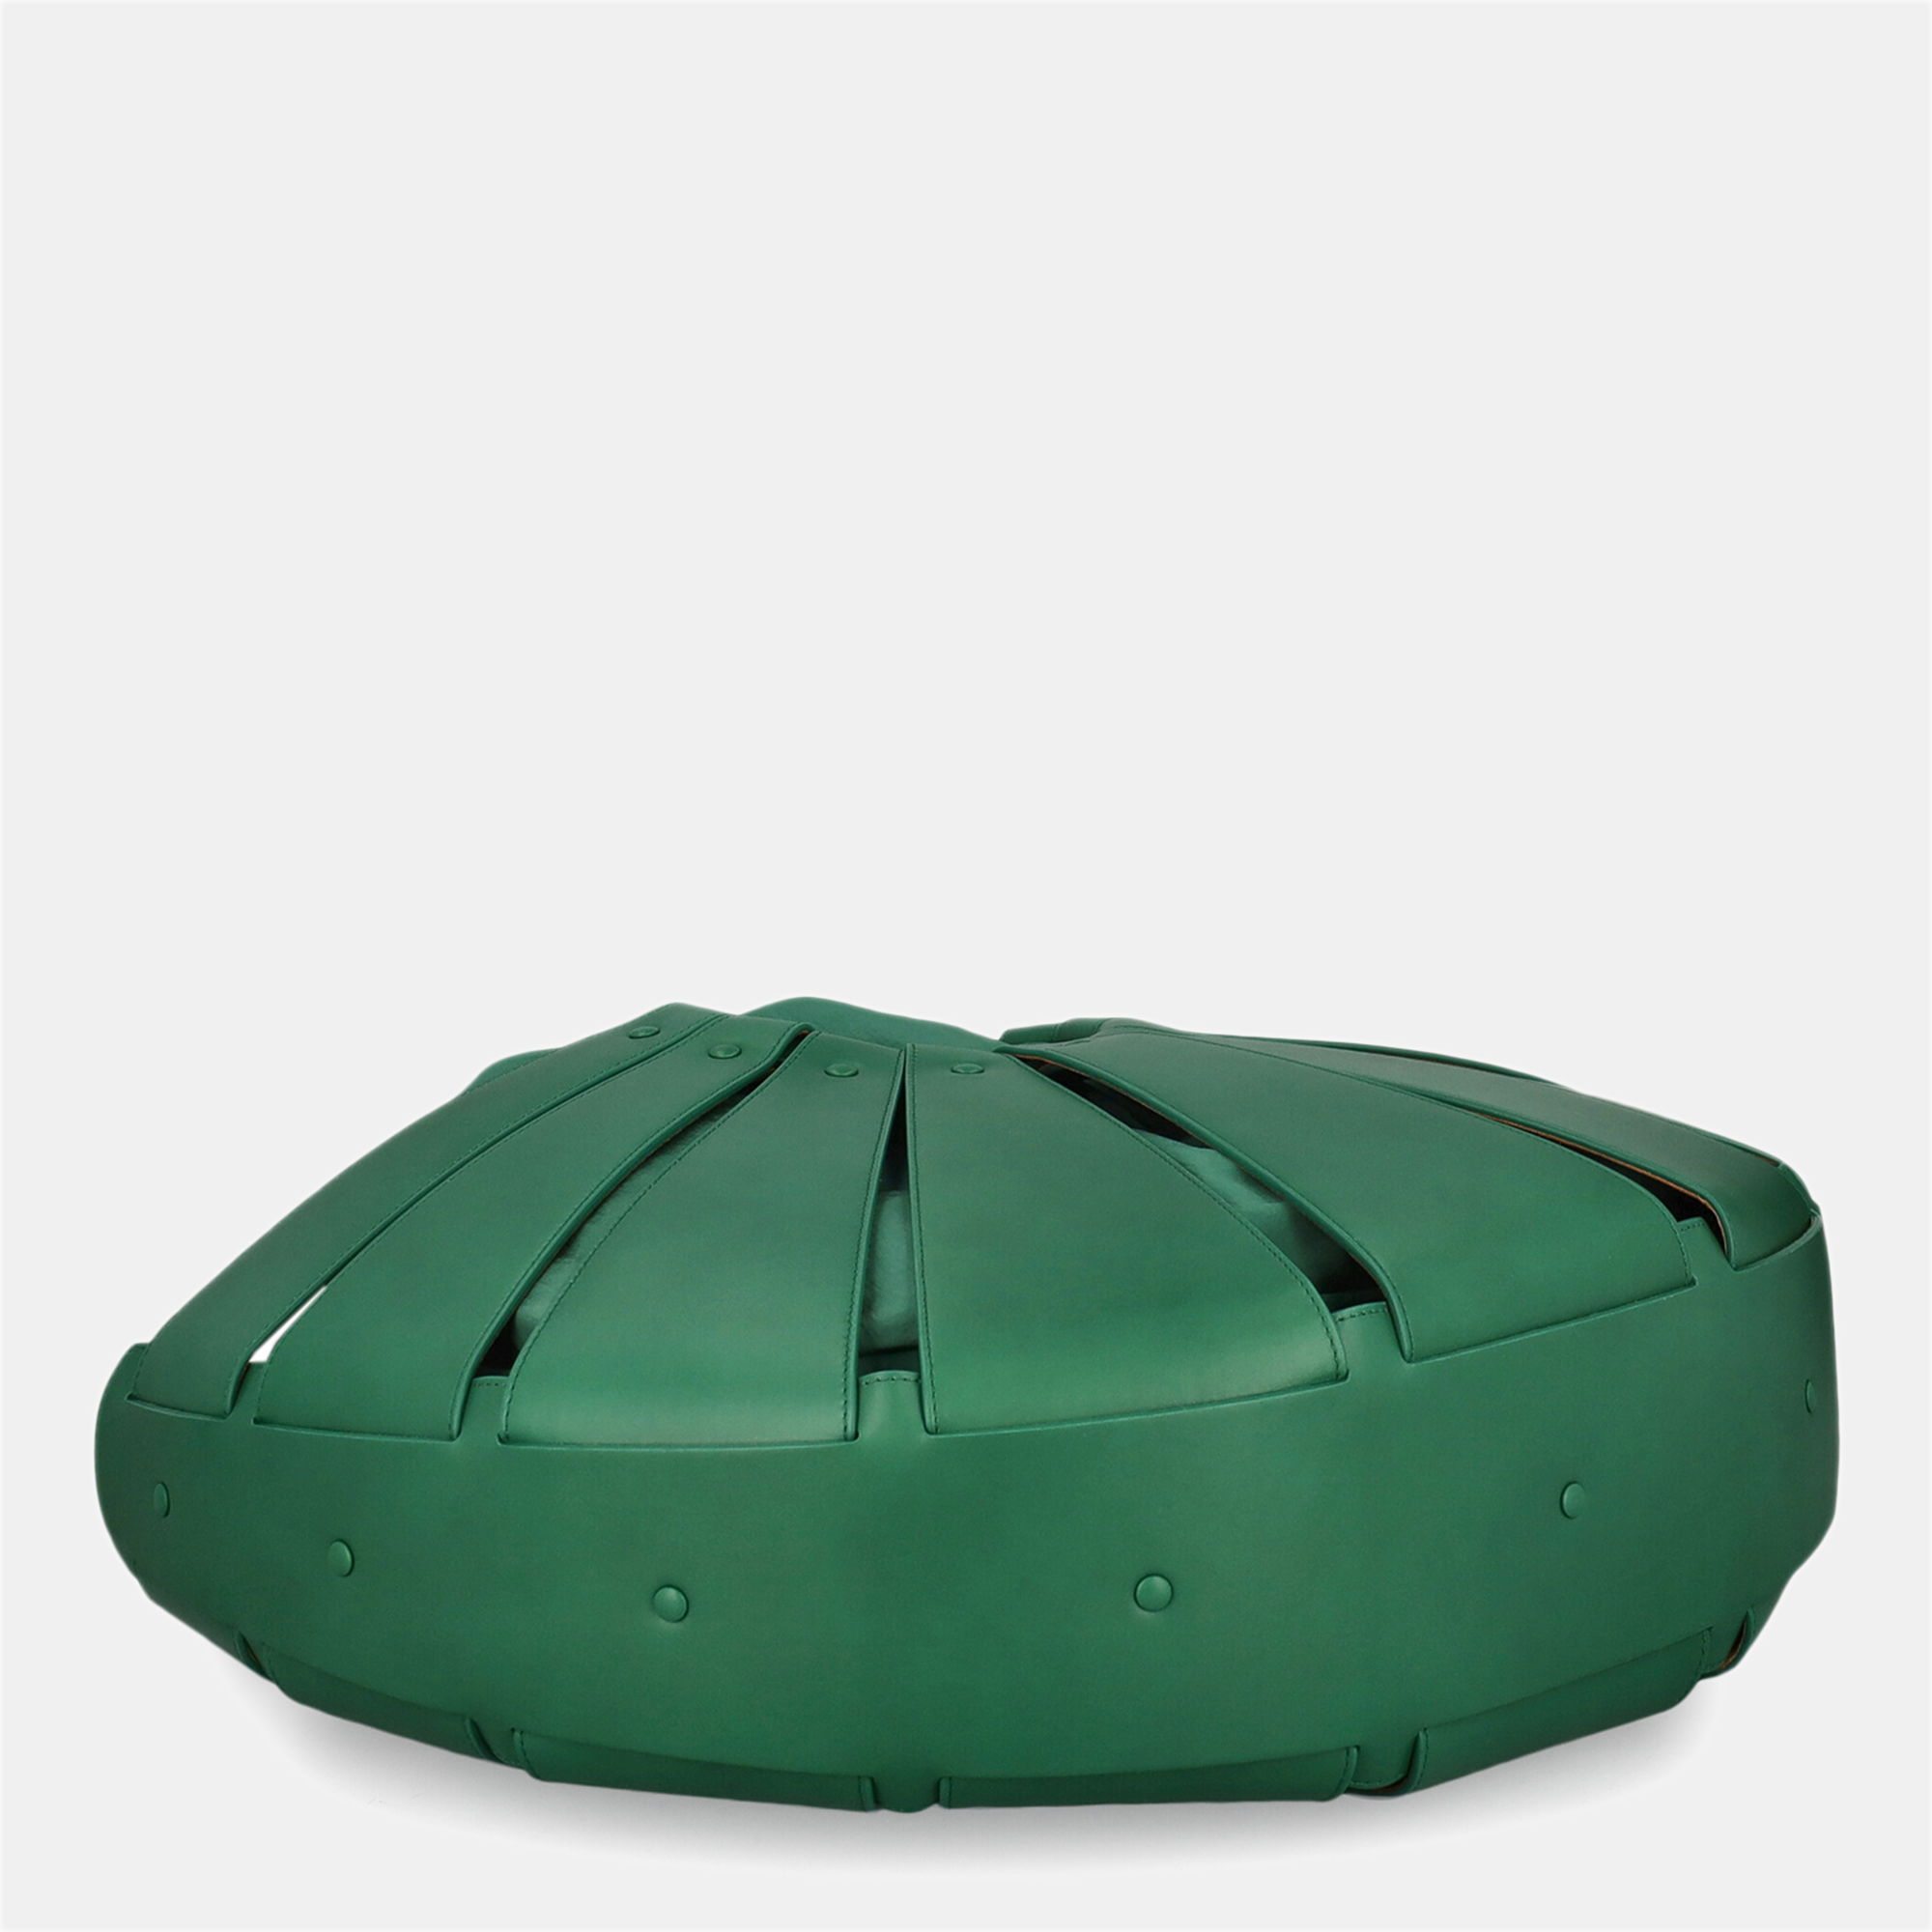 Bottega Veneta Women's Leather Tote Bag - Green - One Size